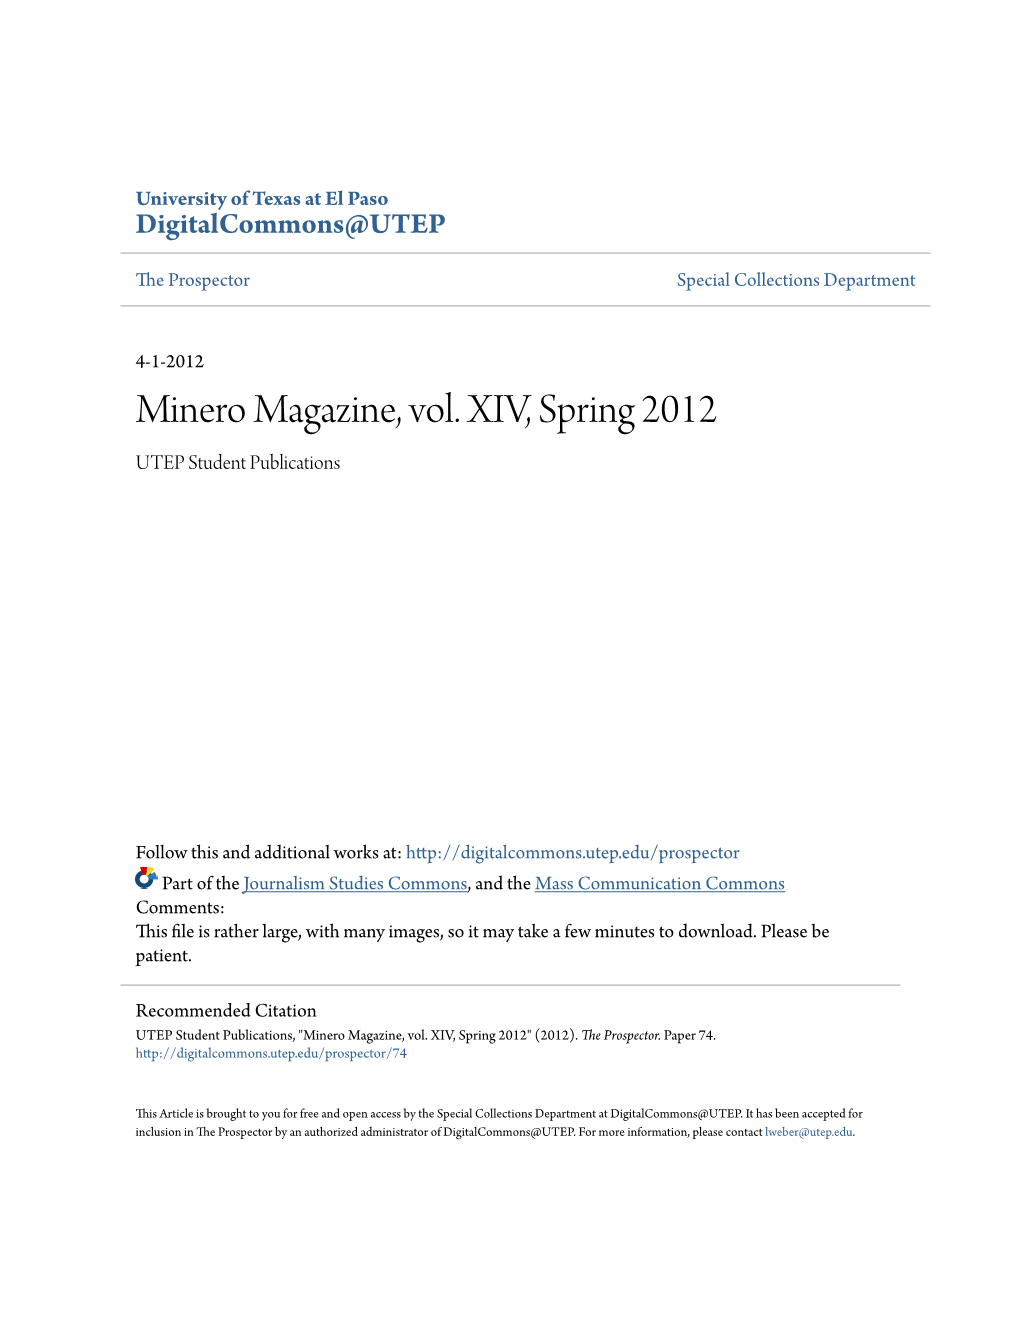 Minero Magazine, Vol. XIV, Spring 2012 UTEP Student Publications